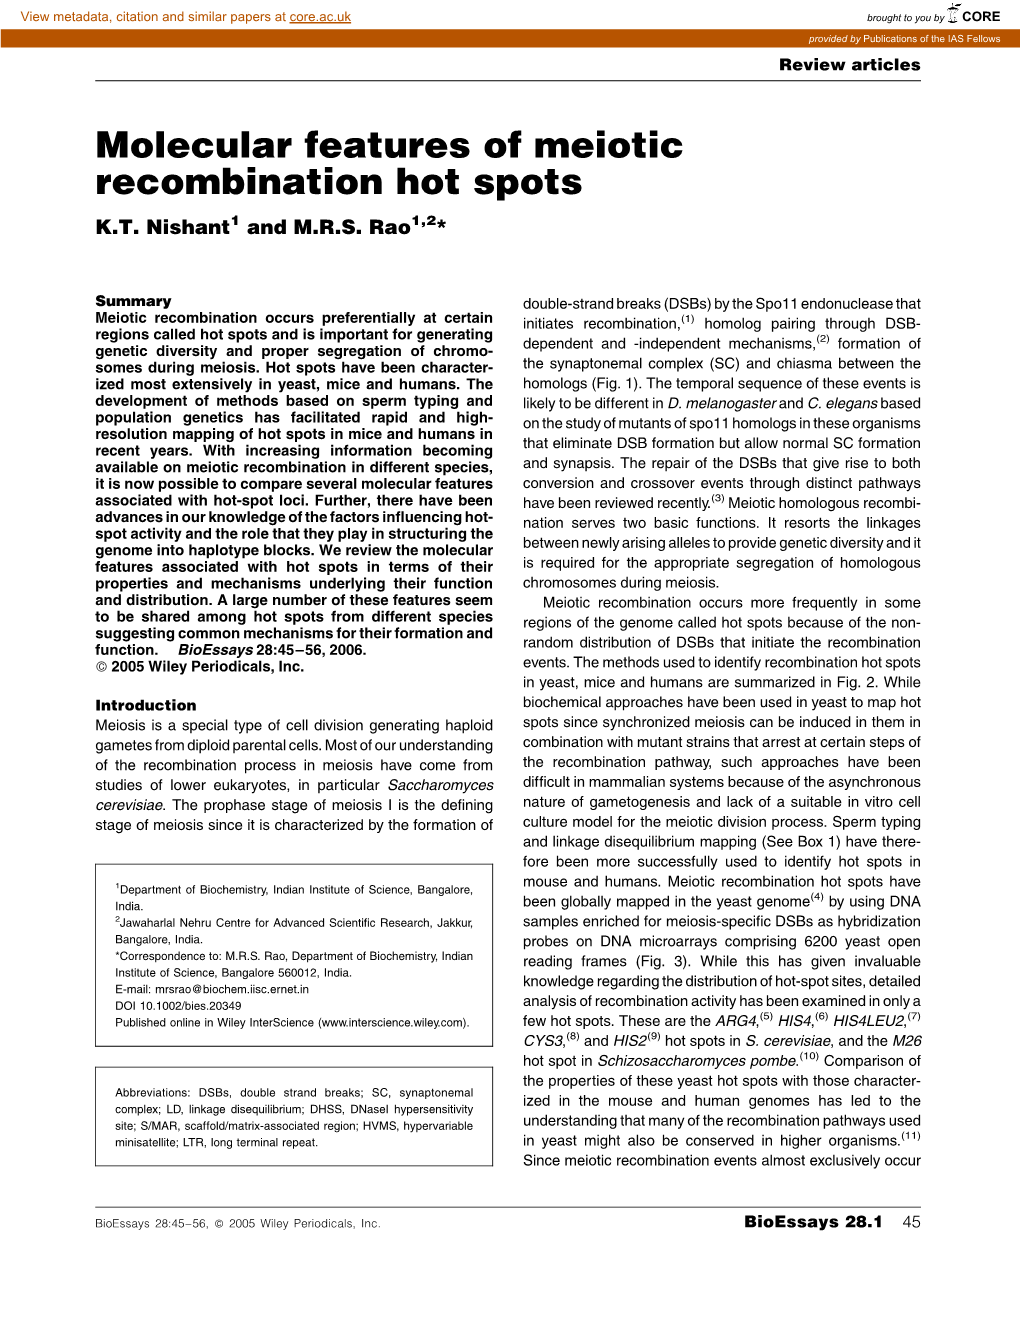 Molecular Features of Meiotic Recombination Hot Spots K.T